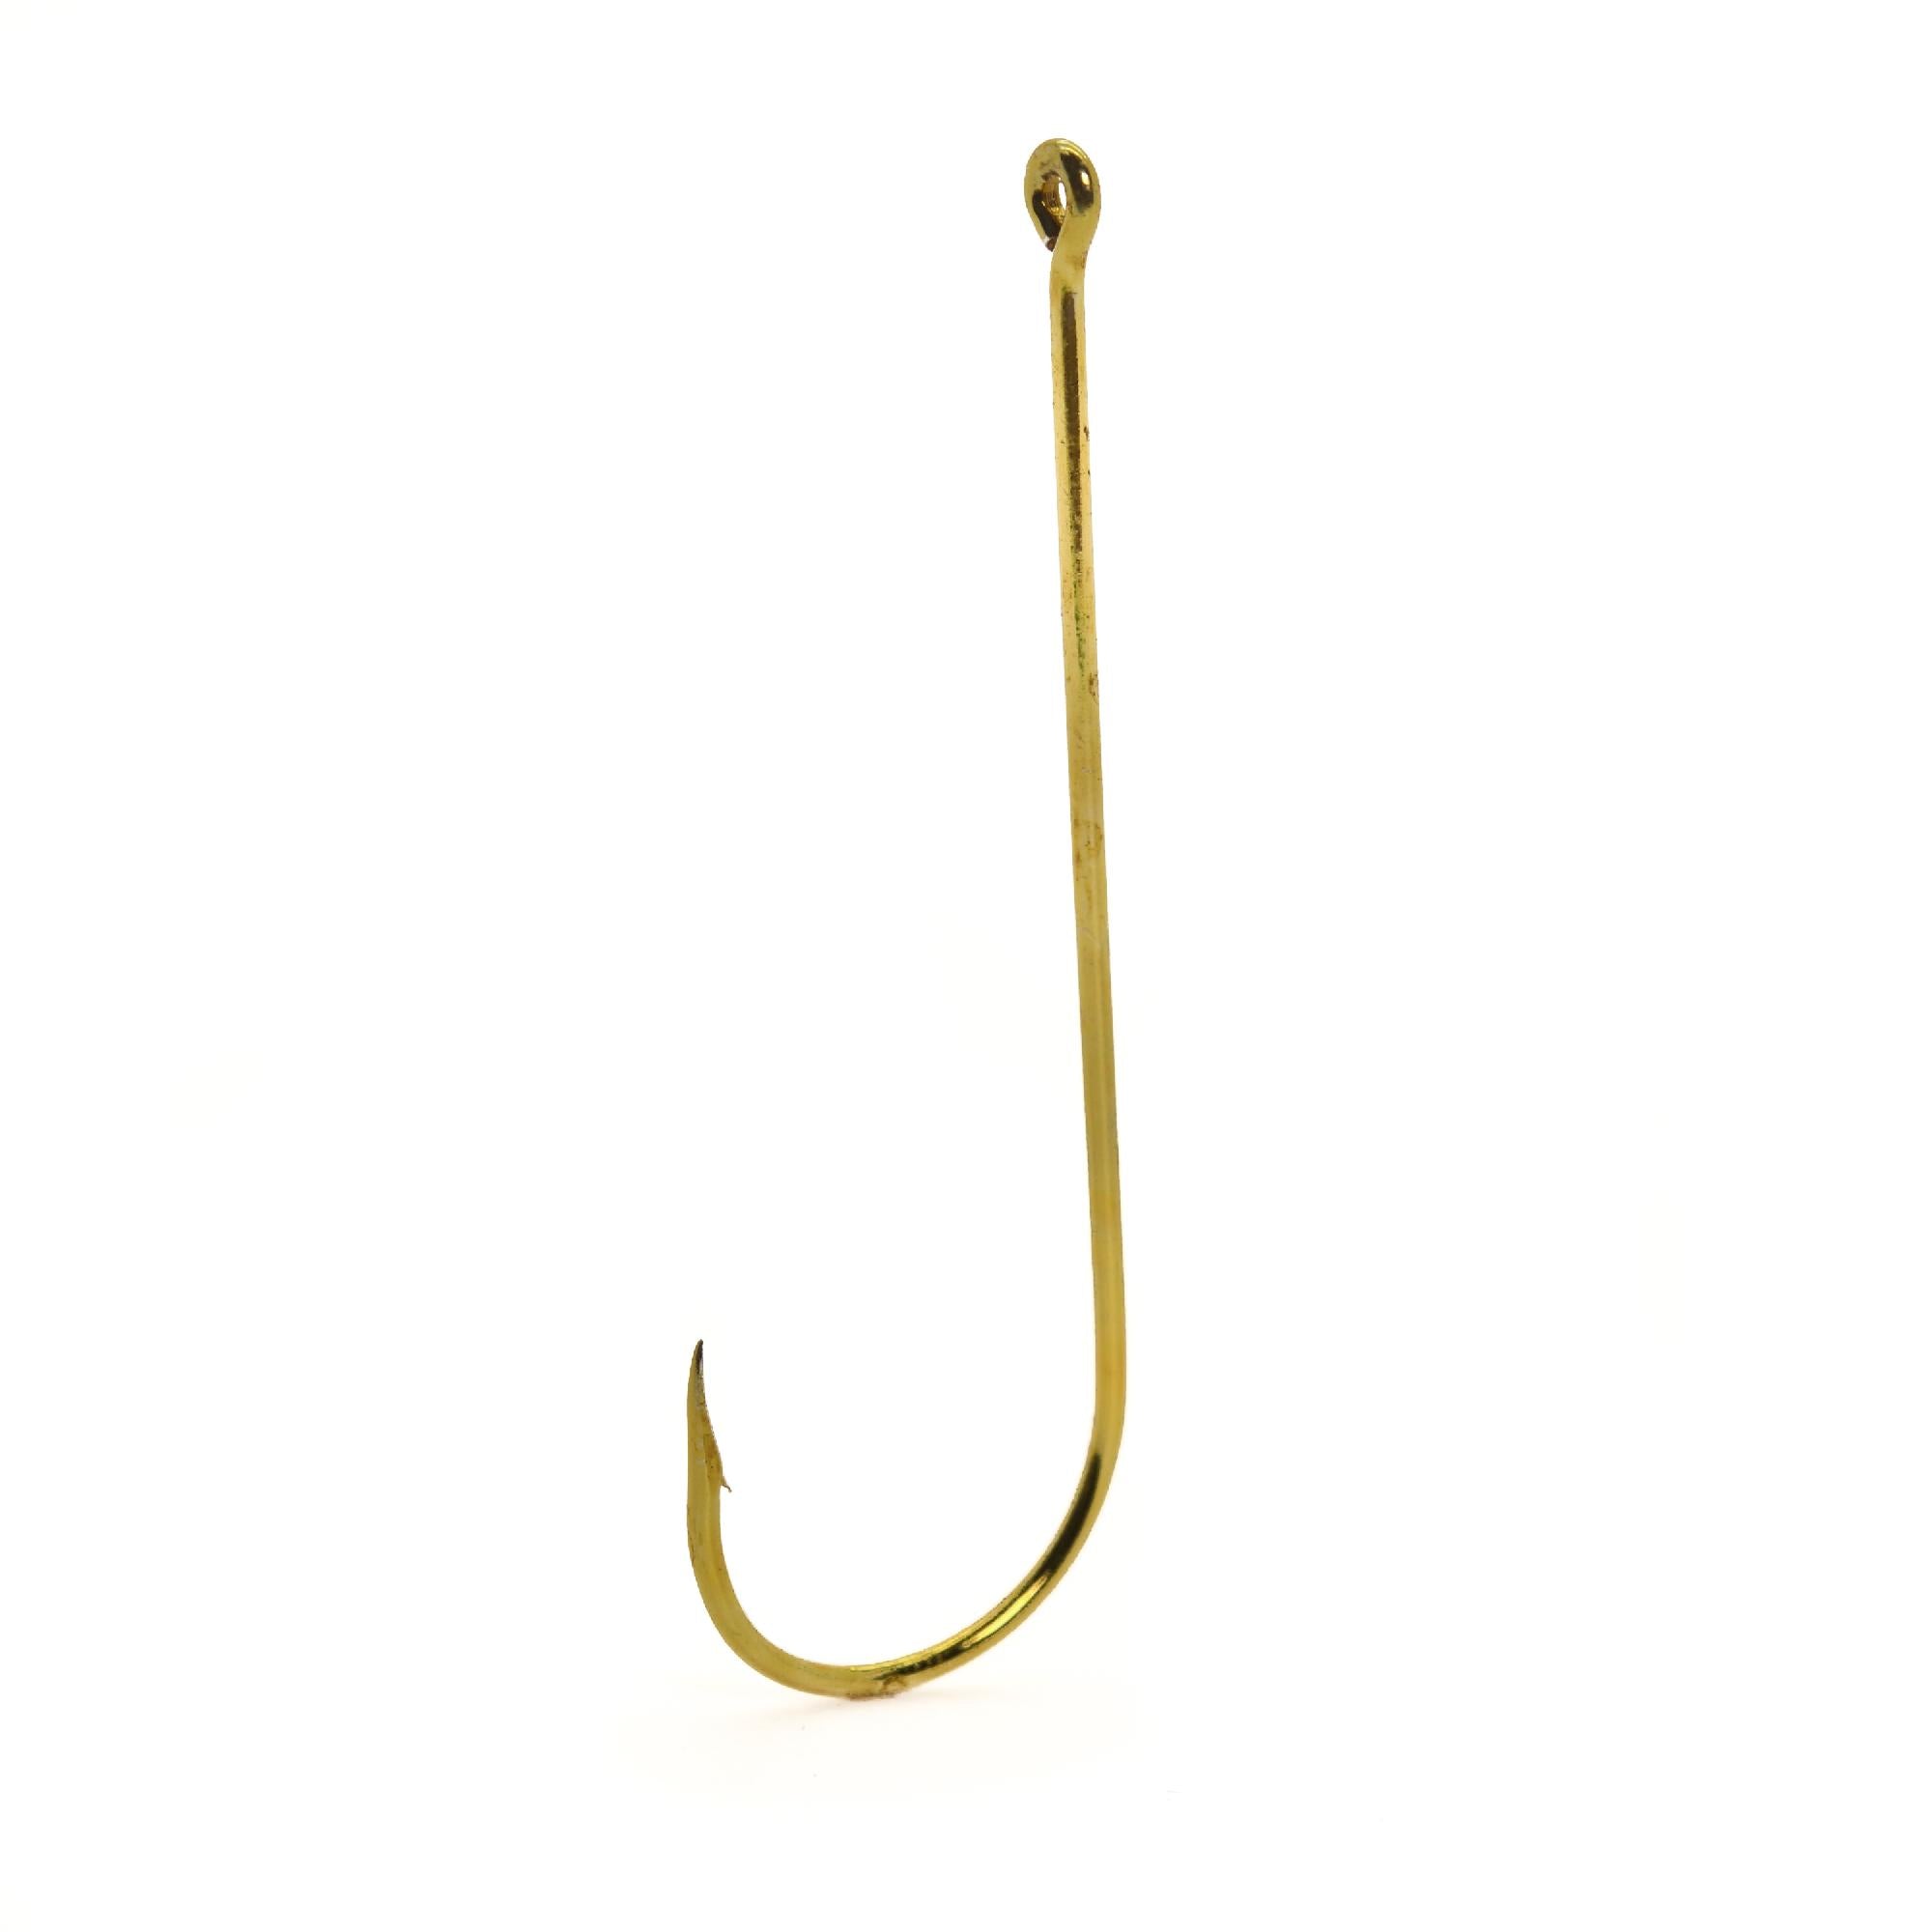 Mustad 1x Fine Wire Aberdeen Hook - Size: #6 (Blonde) 50pc